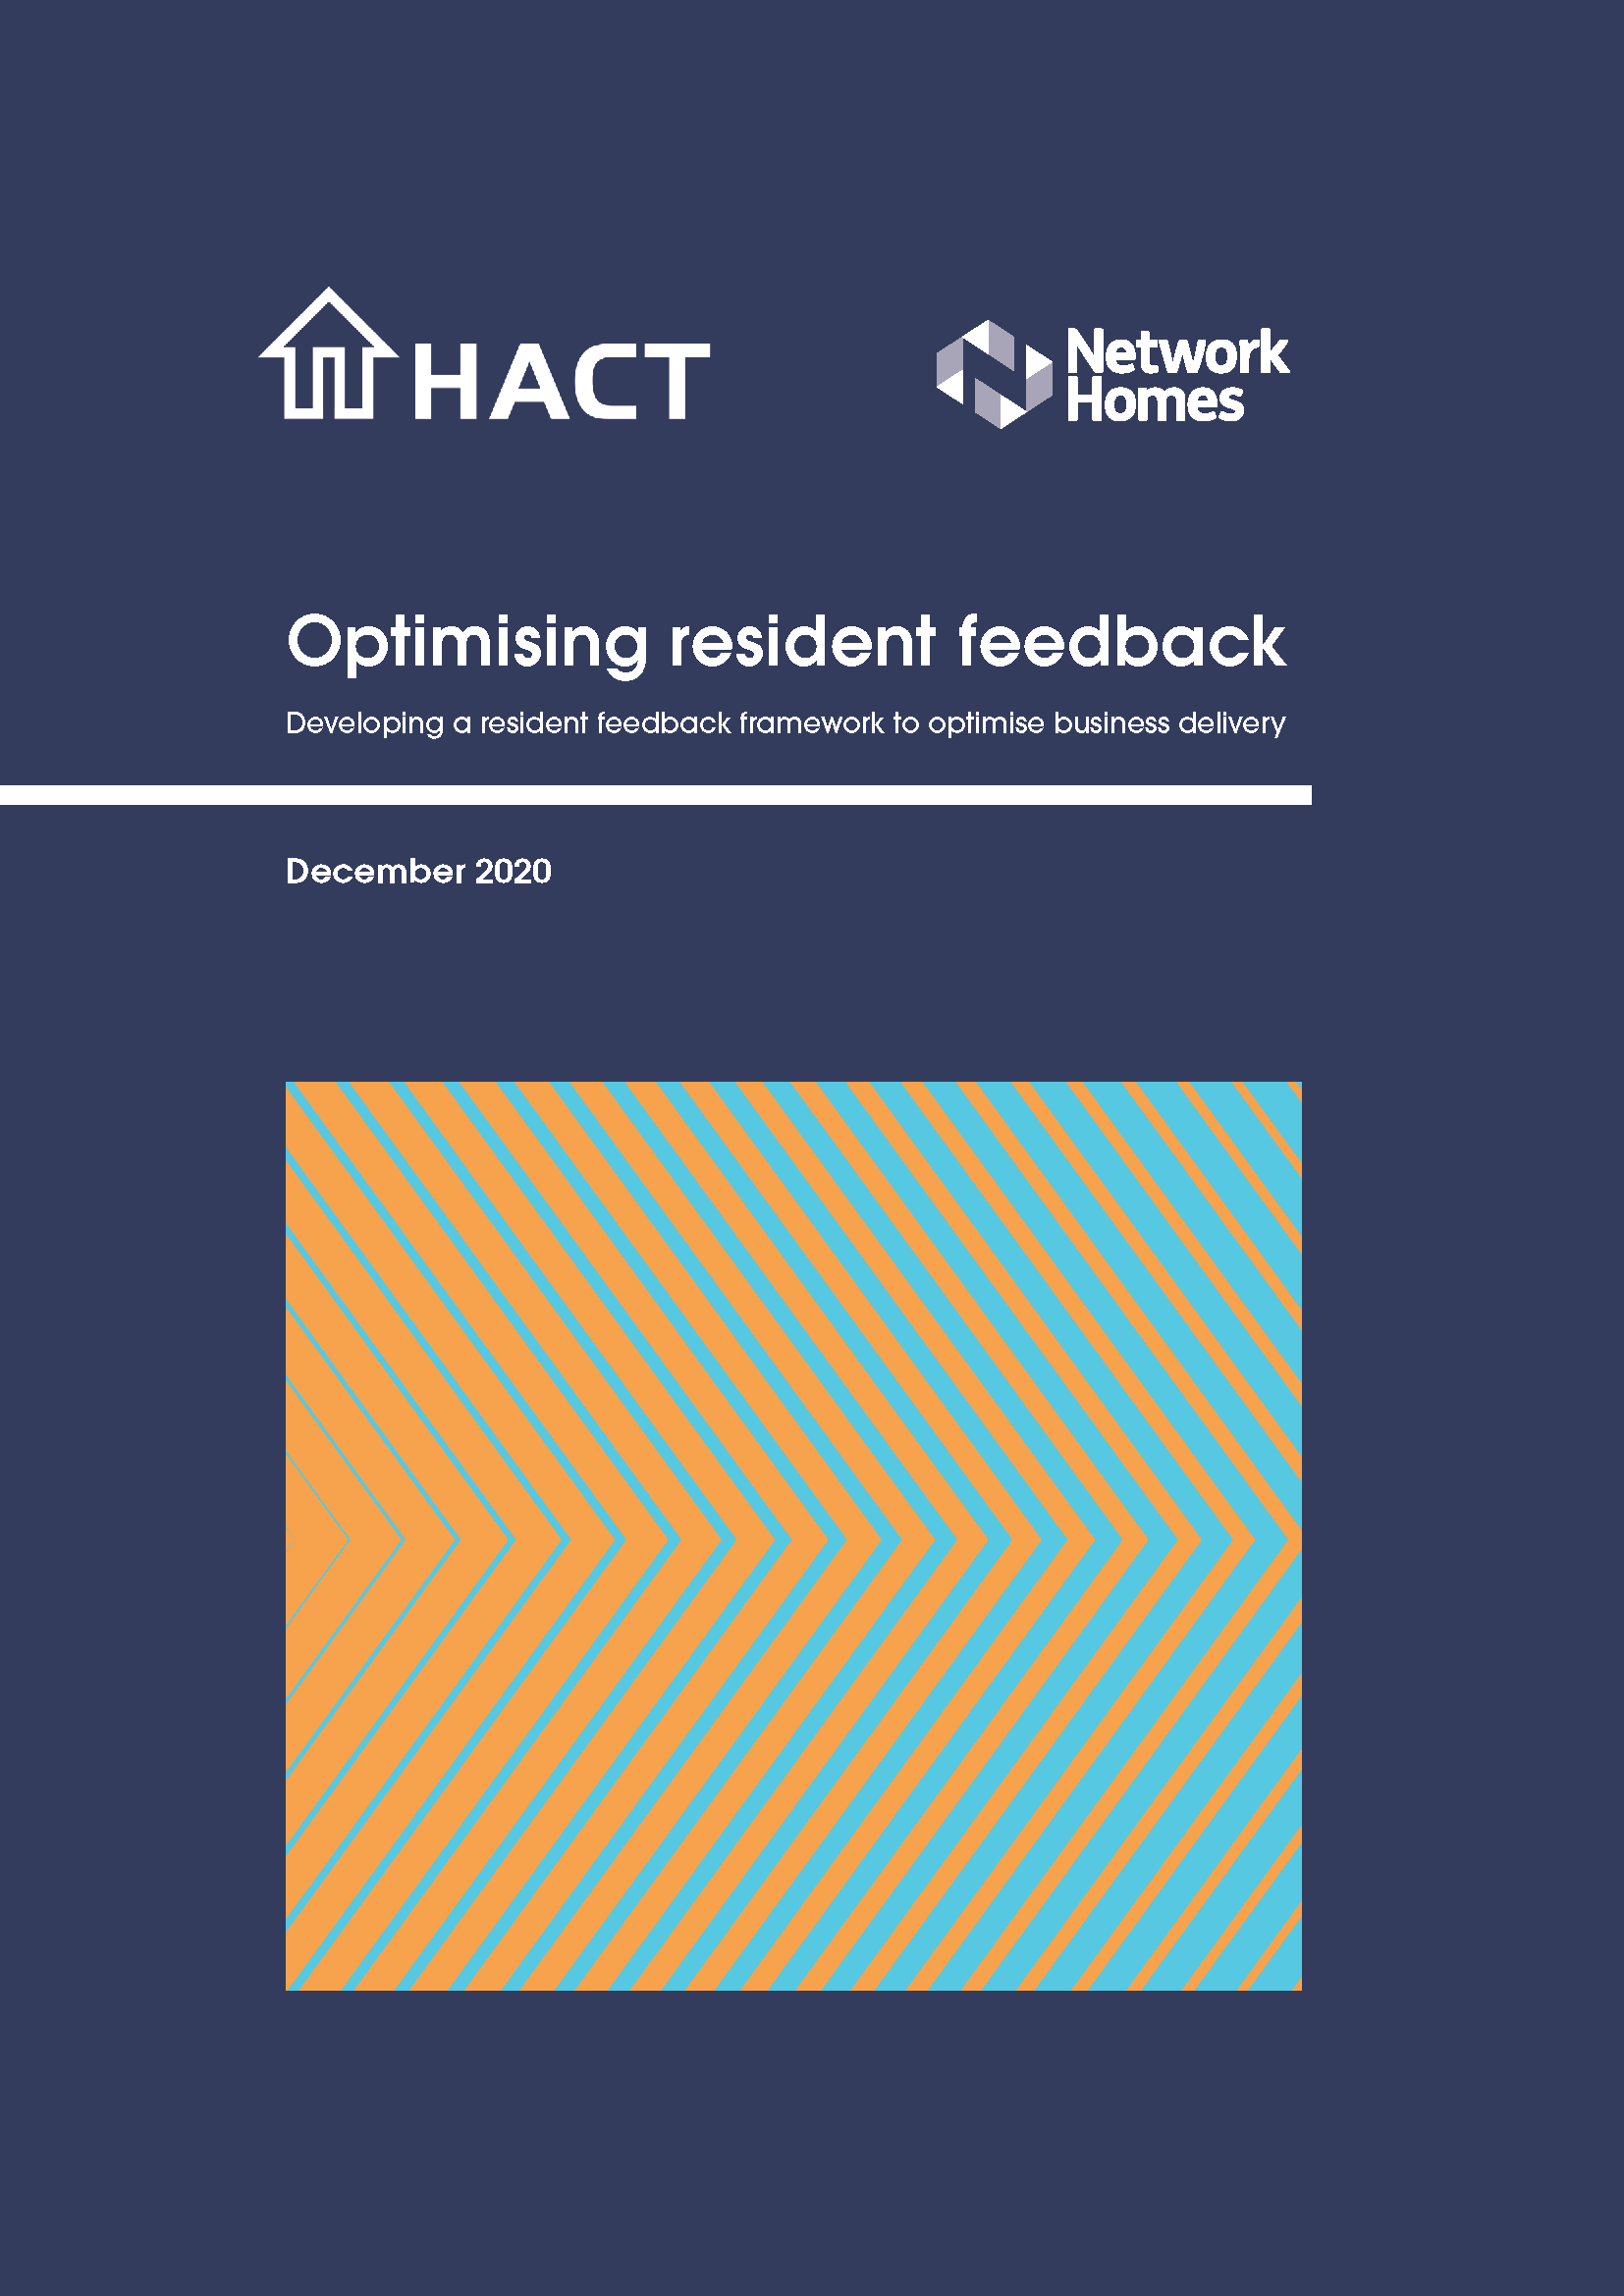 New resident feedback framework developed by HACT